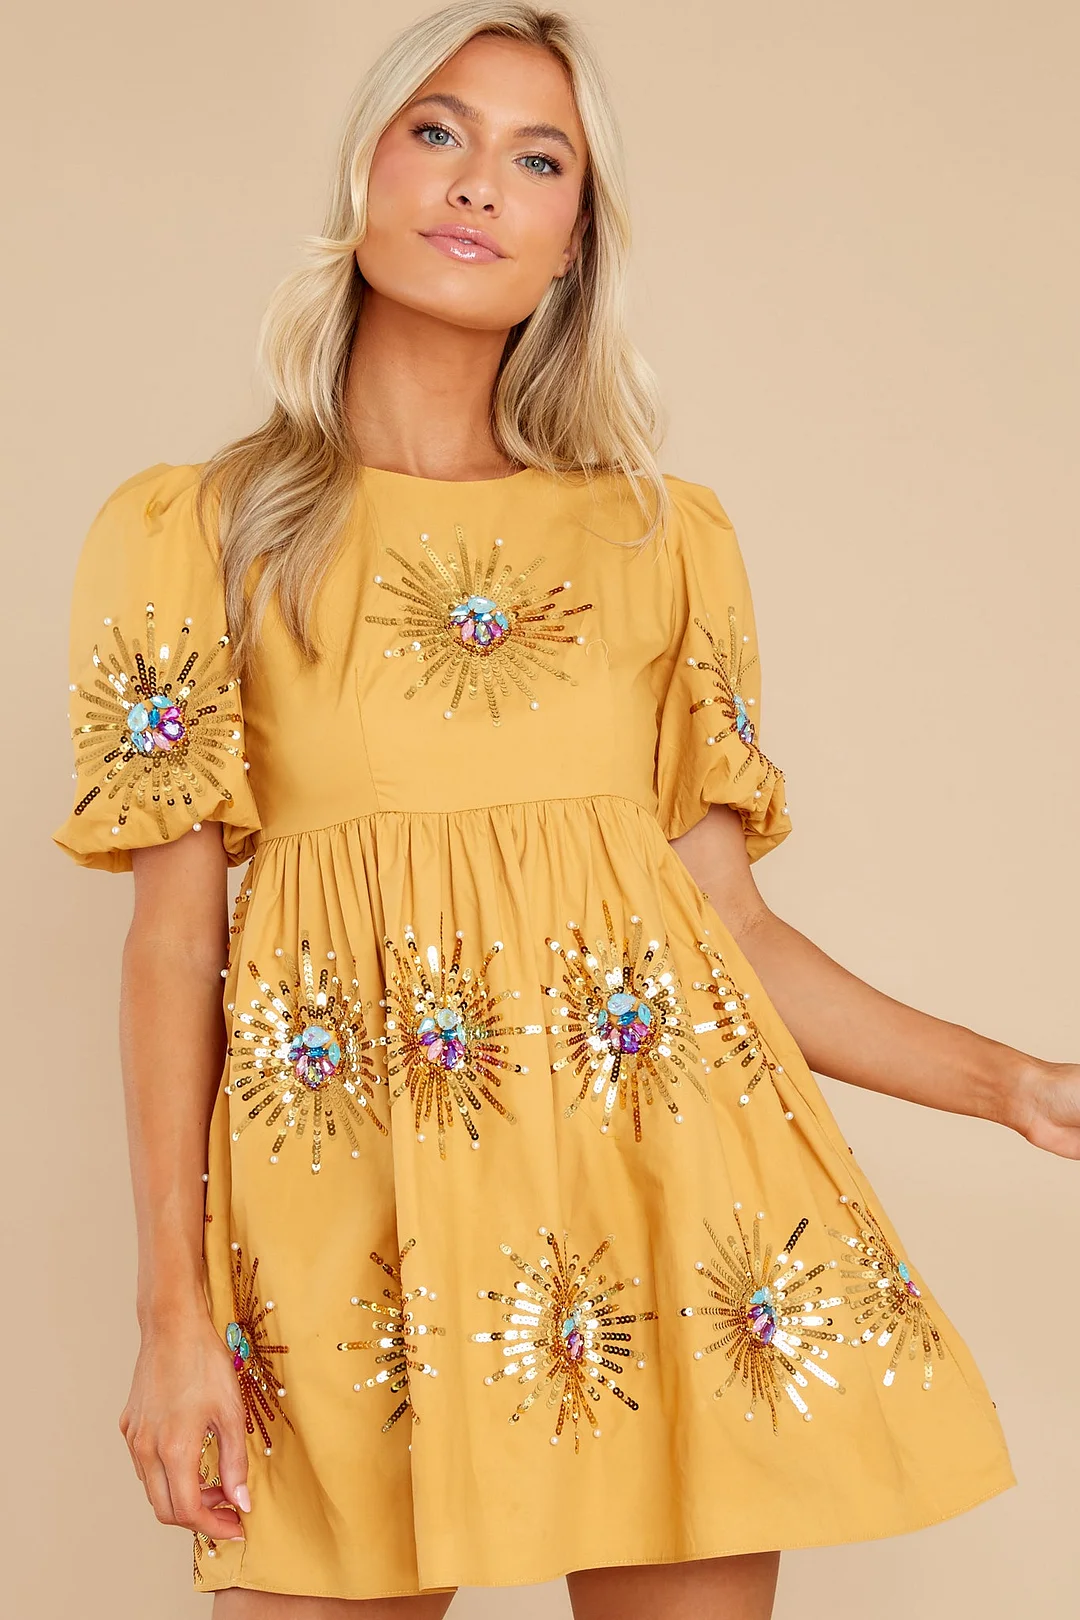 Sunshine Yellow Dress